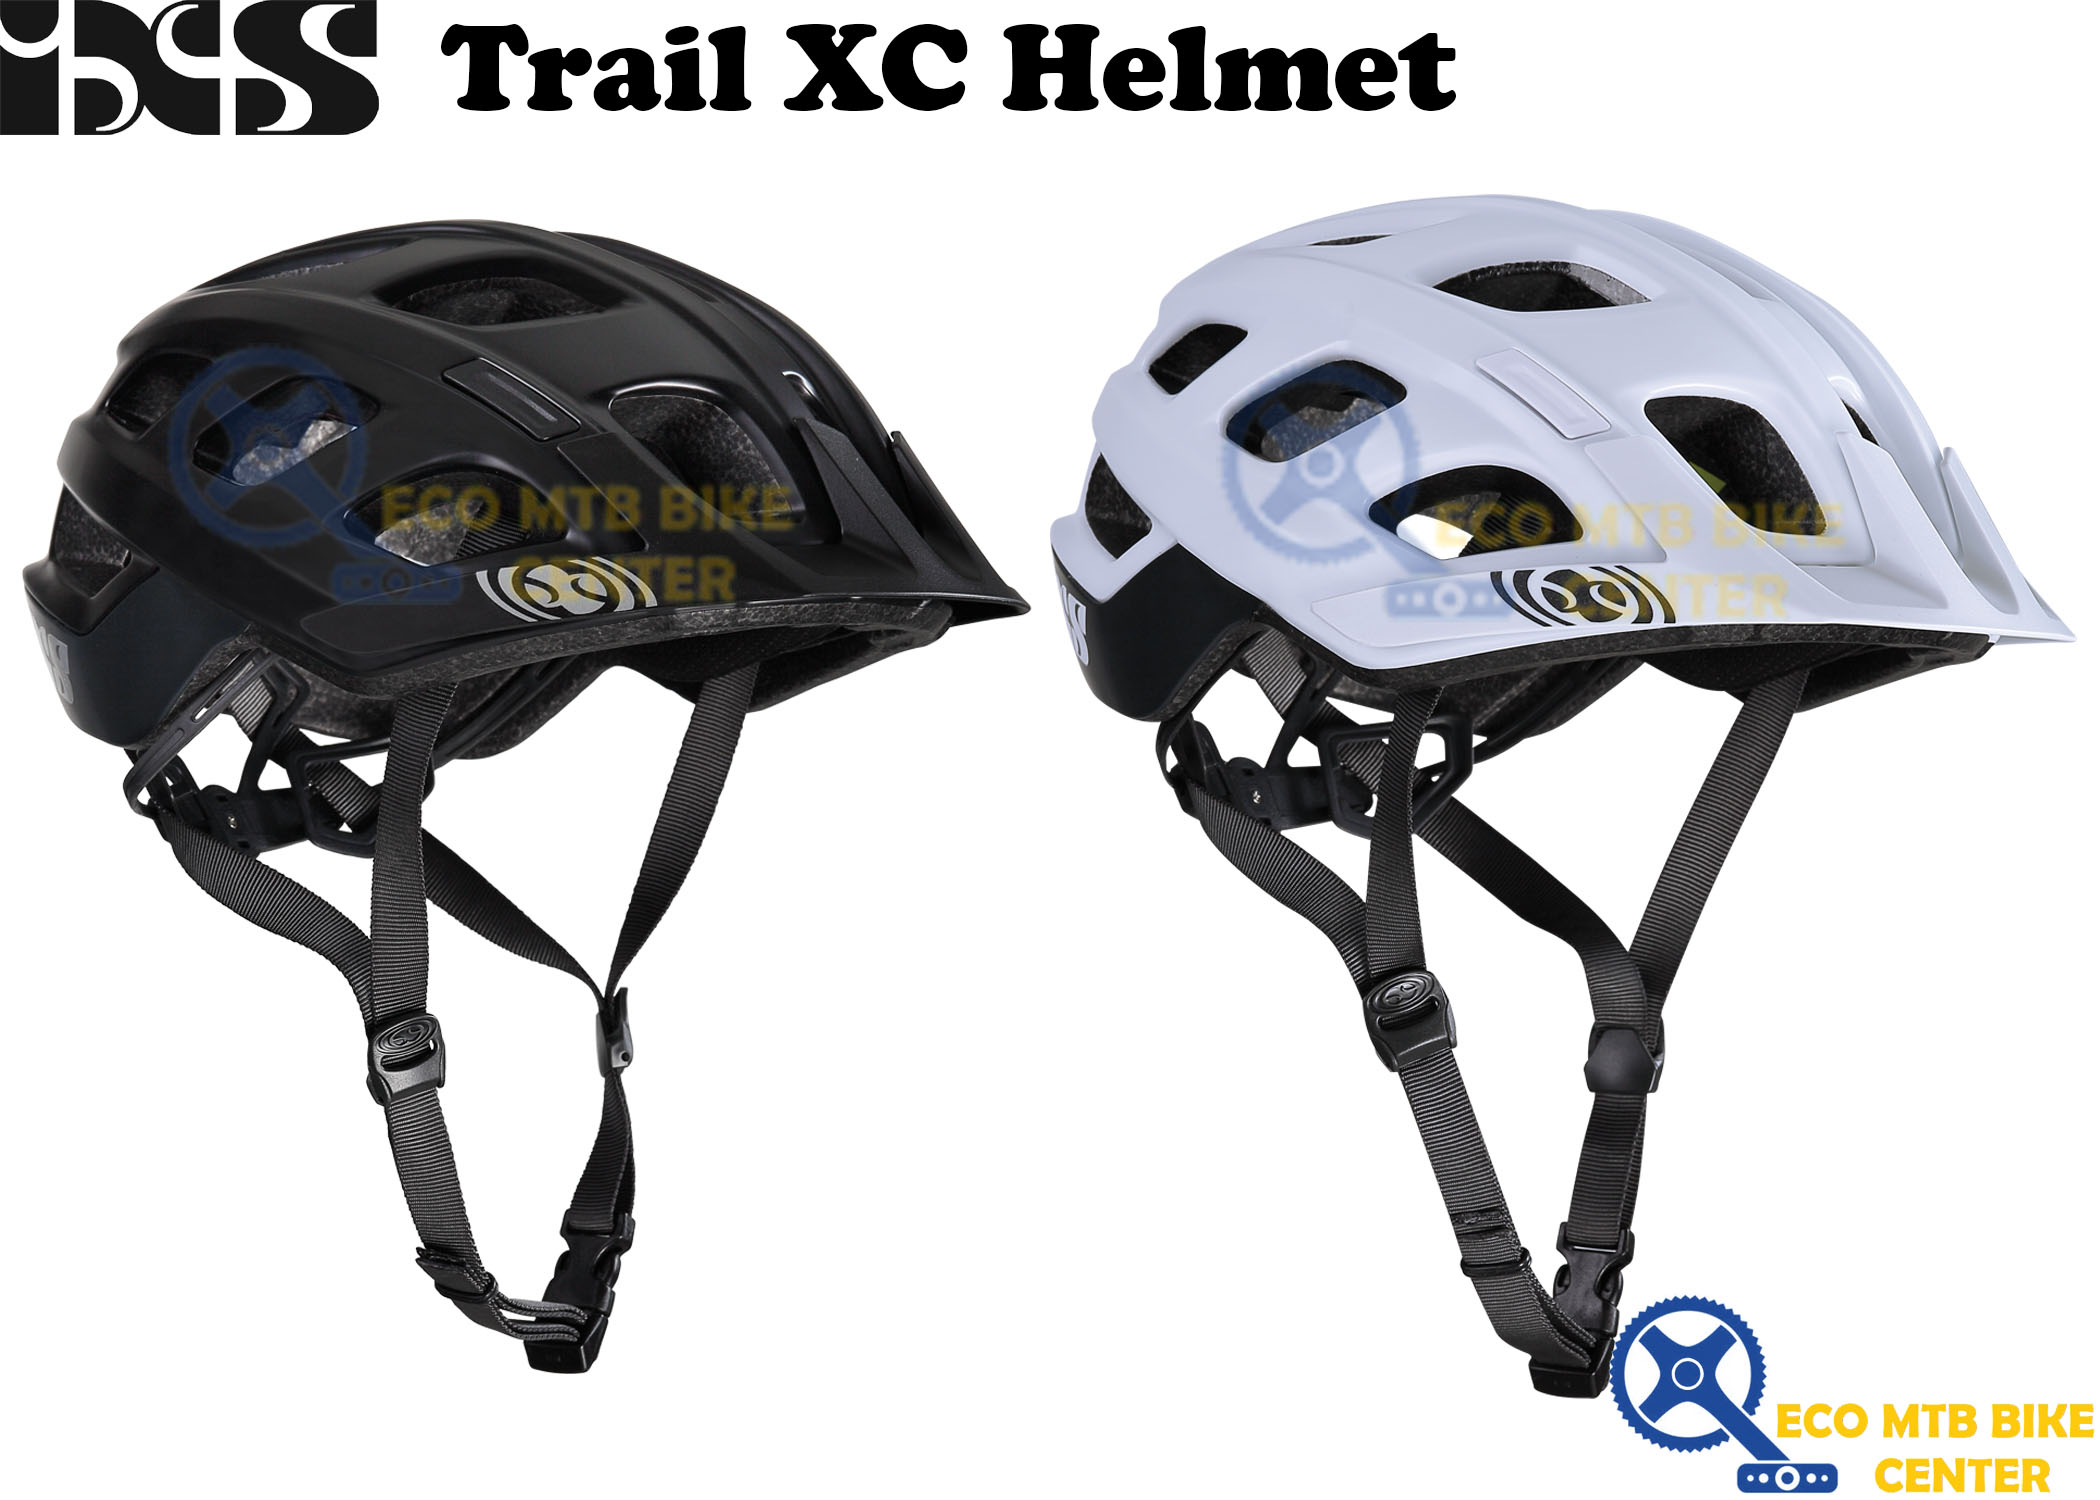 IXS Trail XC Helmet (Special Promo)